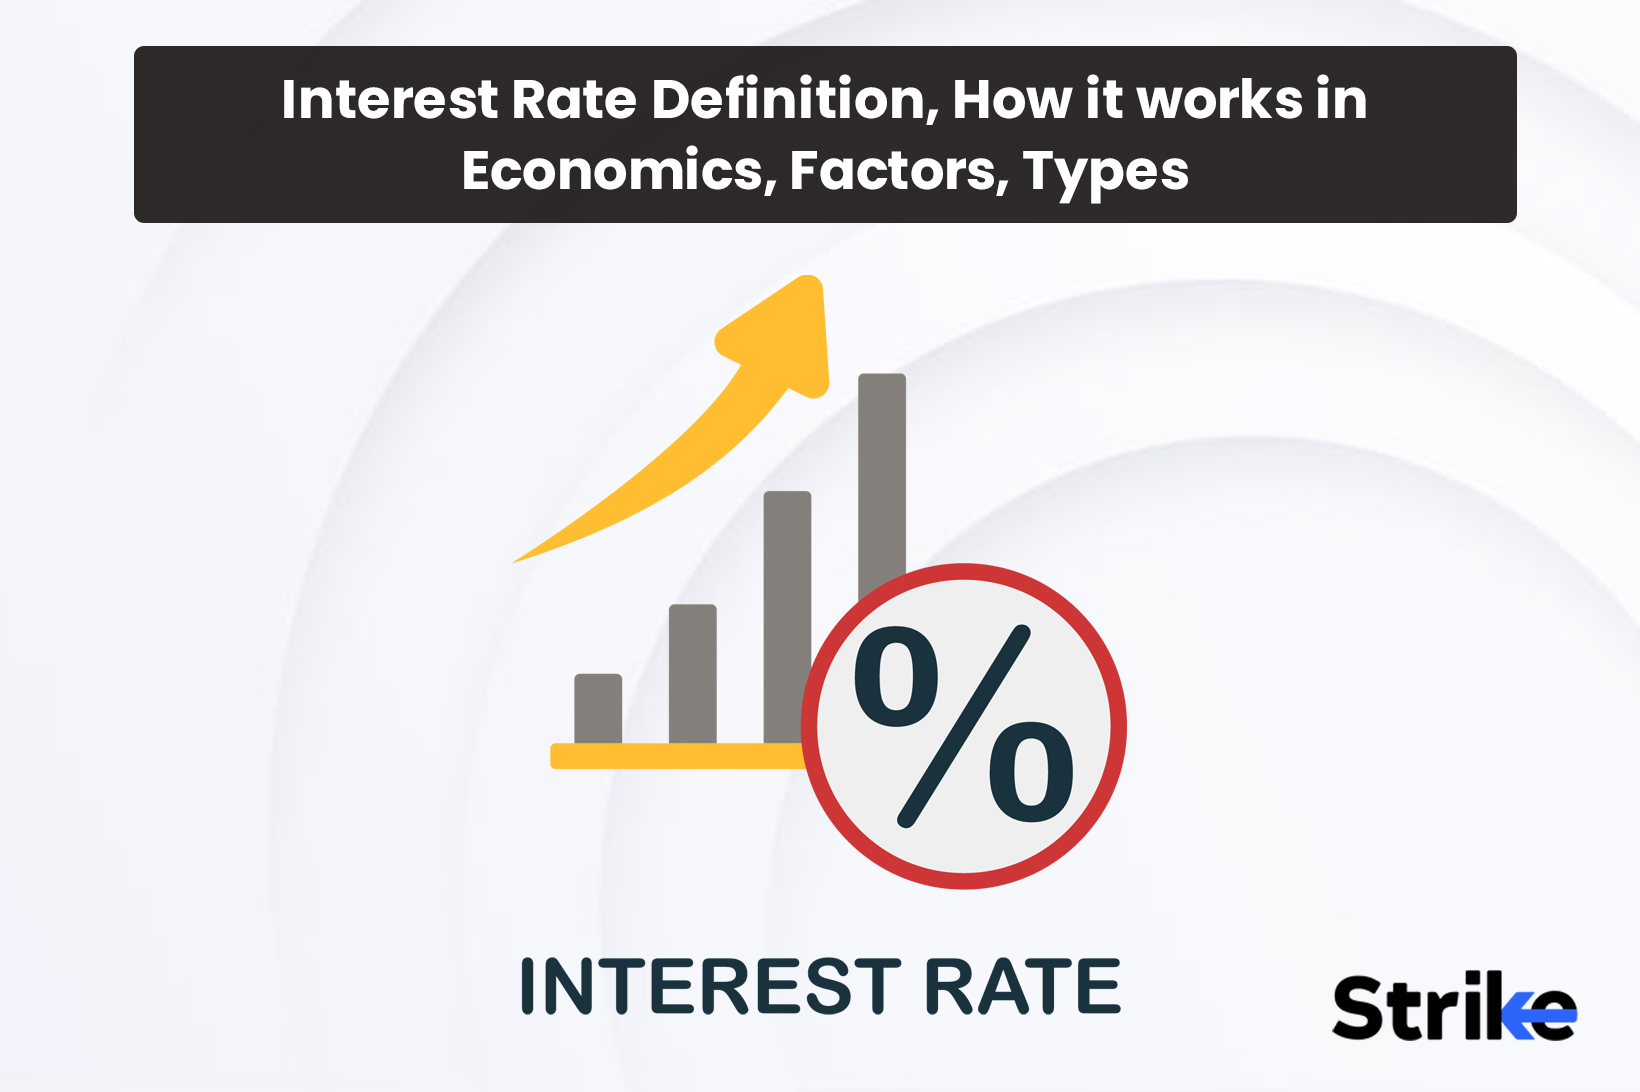 Interest Rate: Definition, How it works in Economics, Factors, Types